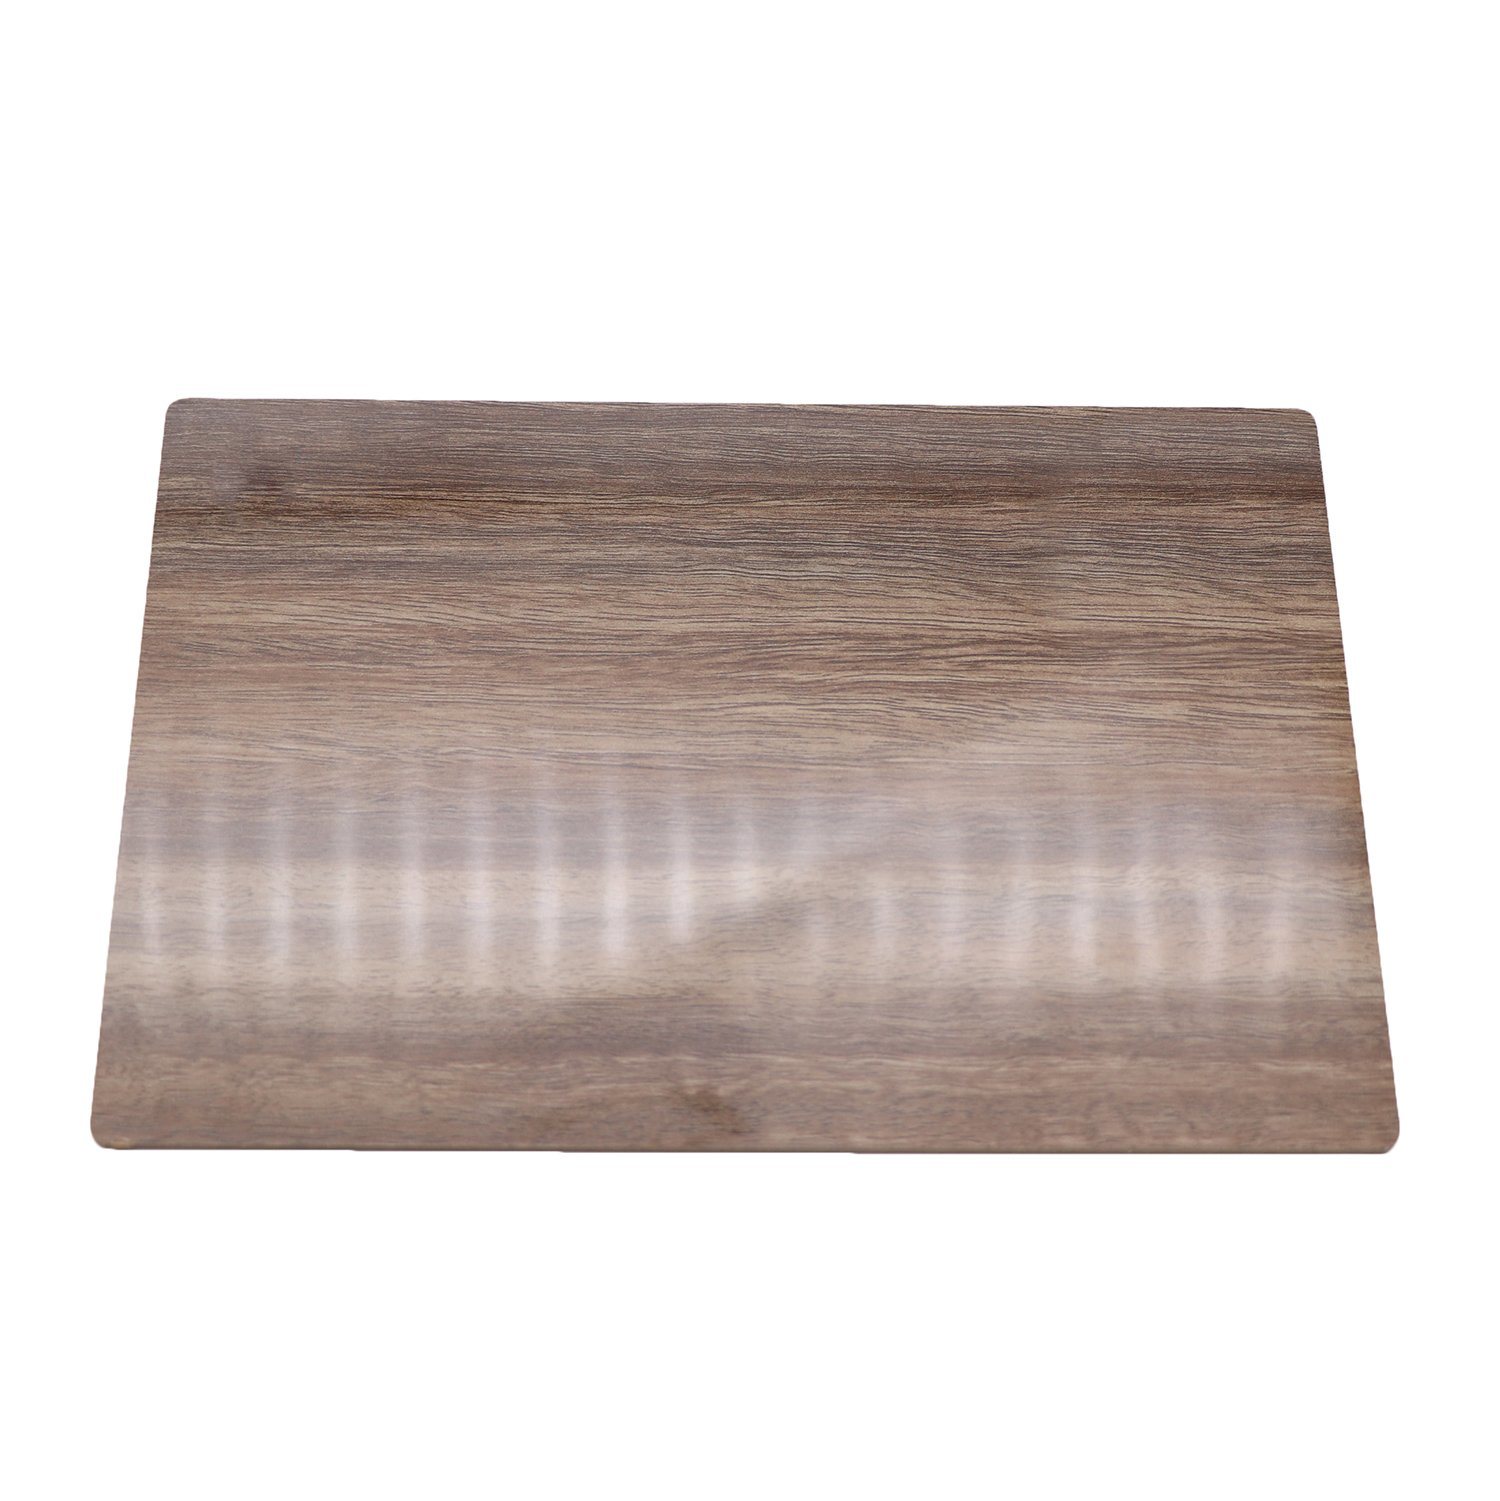 Fancy High Gloos Melamine Faced MDF Laminated MDF Board Wood Veneer Board for Furniture